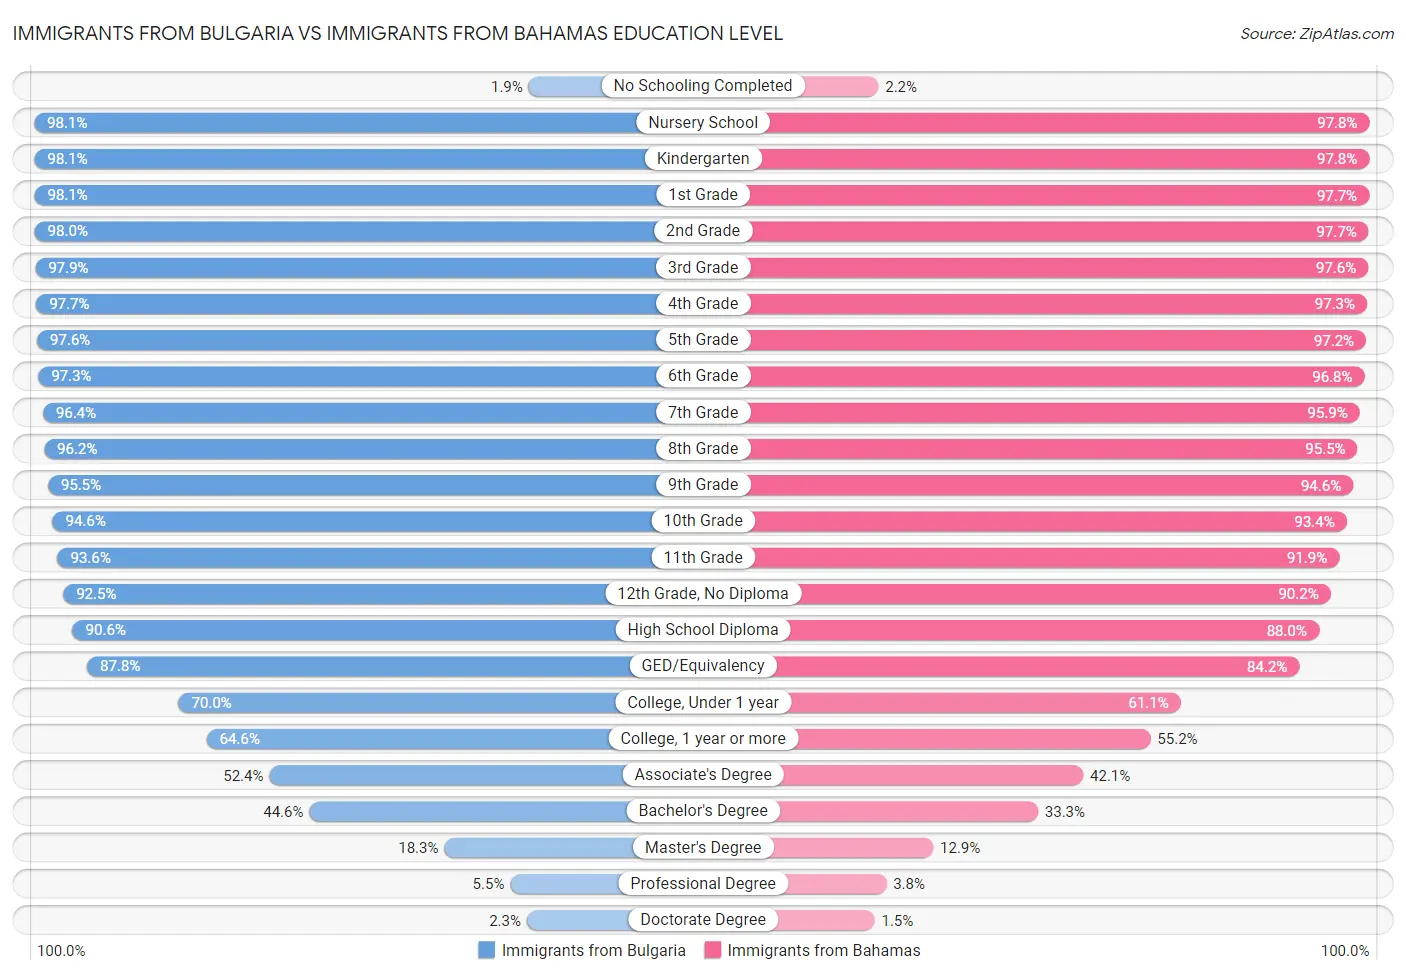 Immigrants from Bulgaria vs Immigrants from Bahamas Education Level